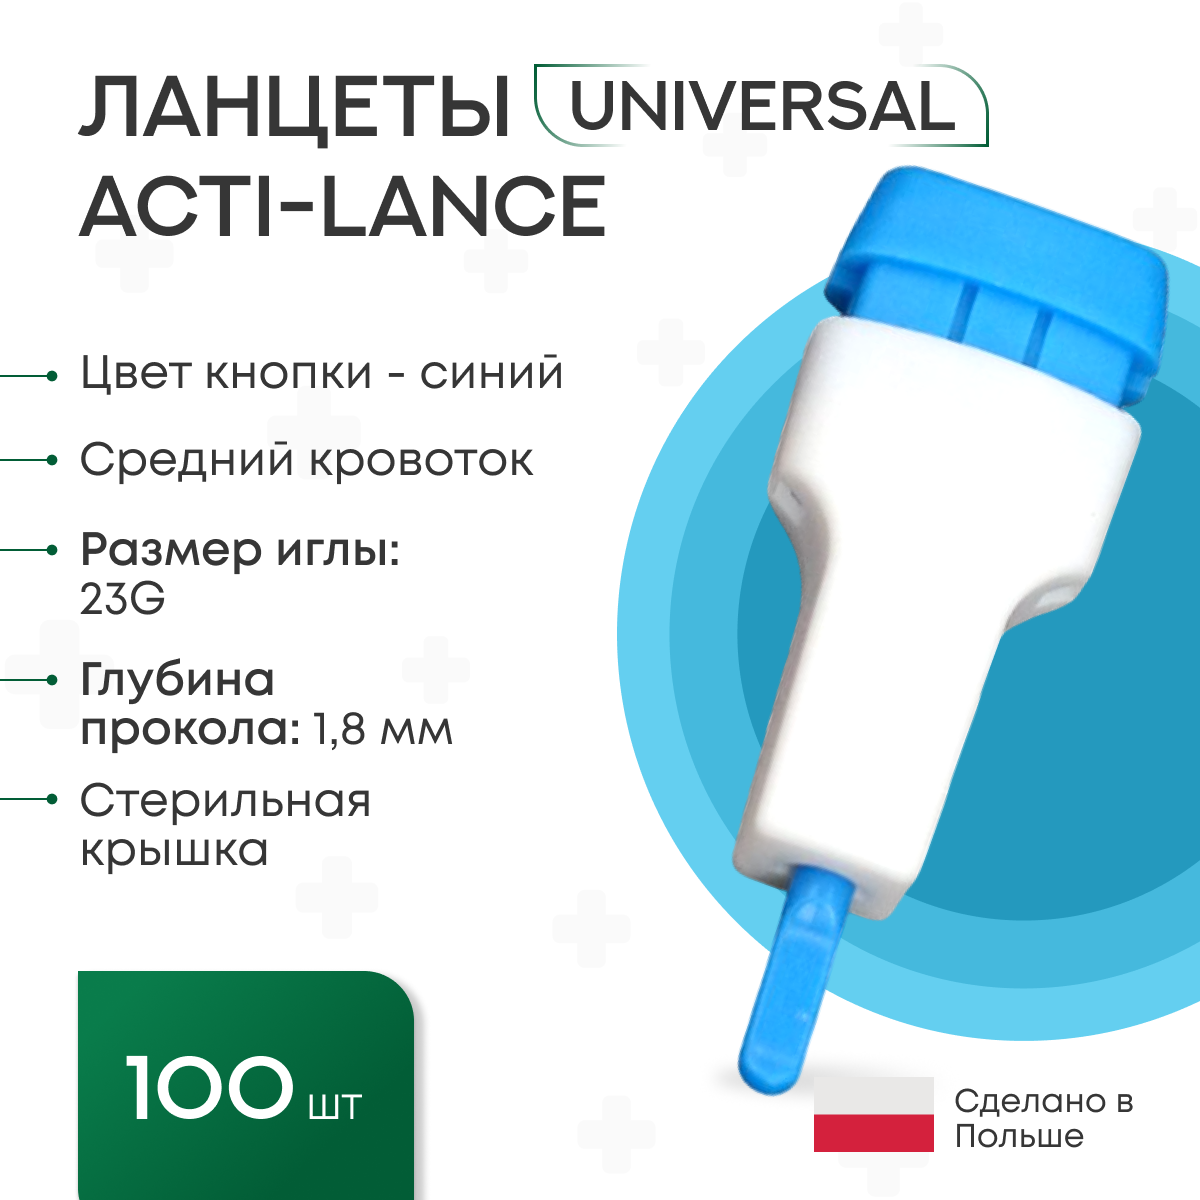 Ланцеты Acti-lance Universal для капиллярного забора крови, 100 шт, глубина прокола 1,8 мм, синие